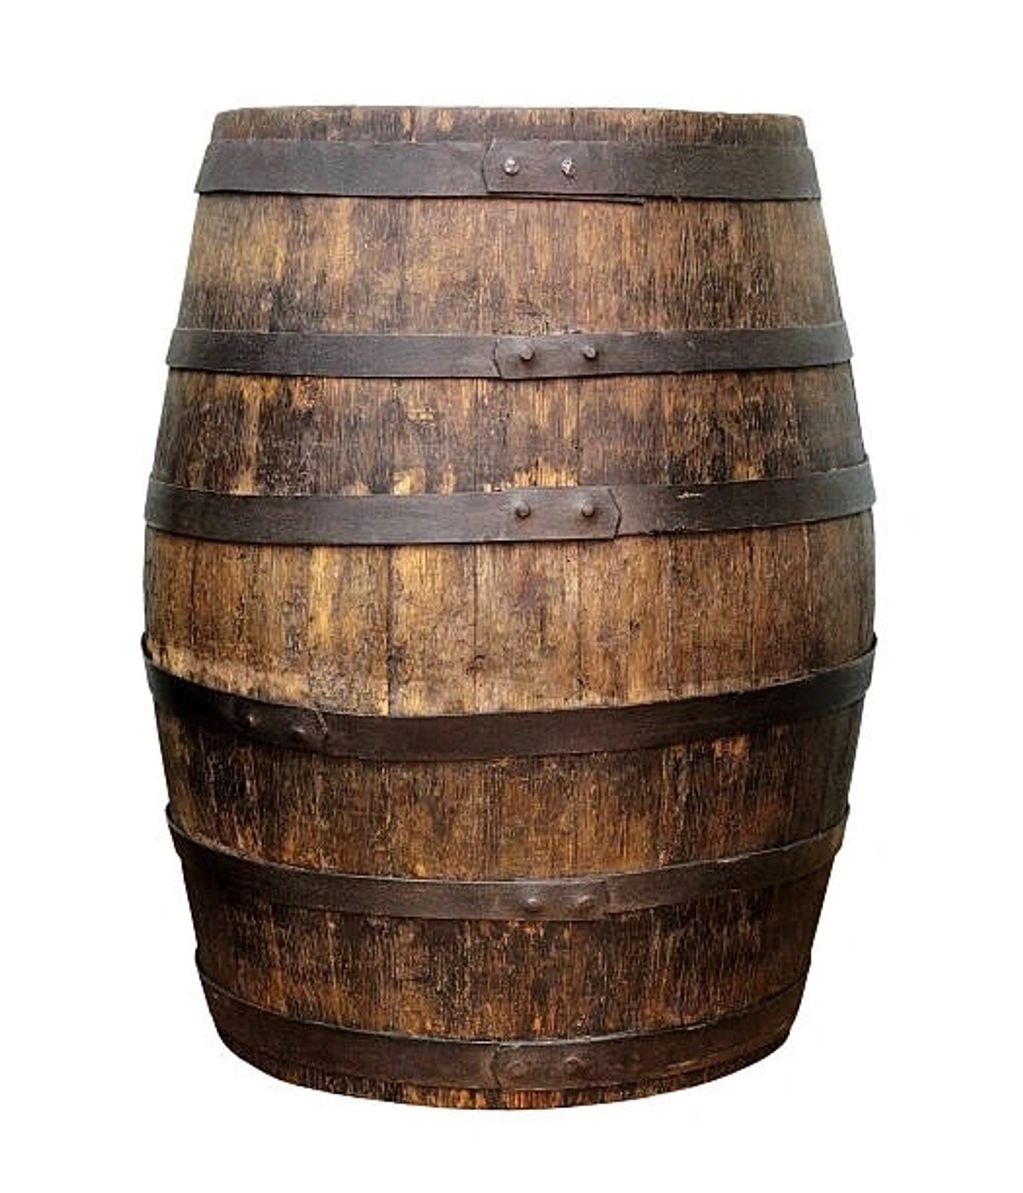 Atlanta Whiskey Bourbon Barrel - Grade B (More rustic than Grade A)